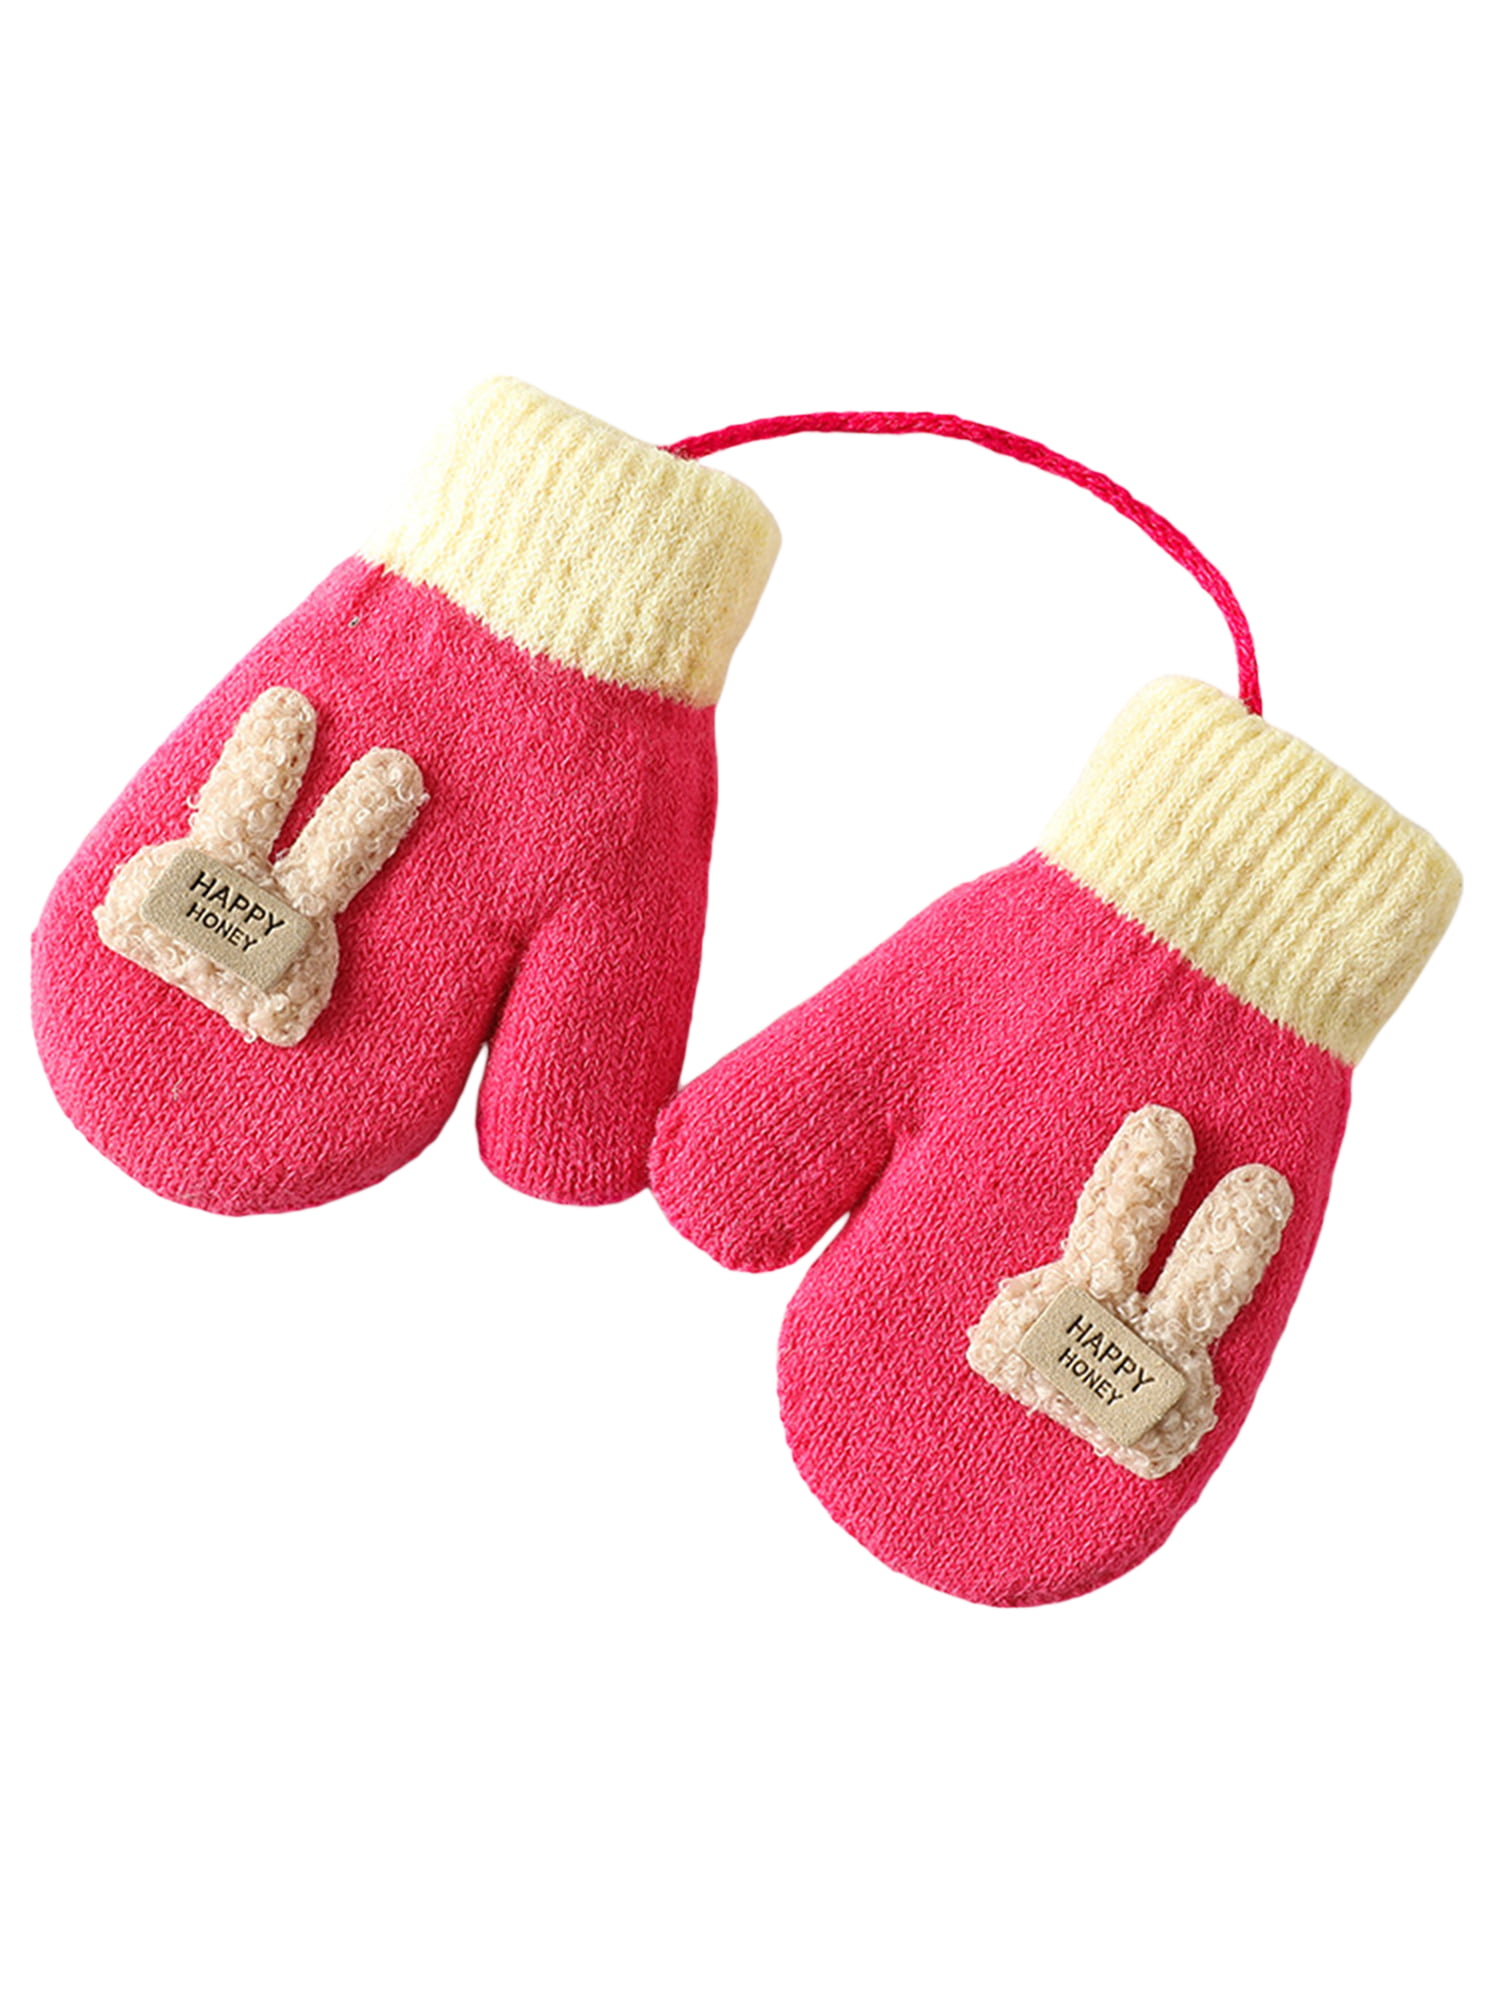 Kids Toddler Winter Warm Wool Knitted Mittens Boys Girls Cute Star Gloves String 